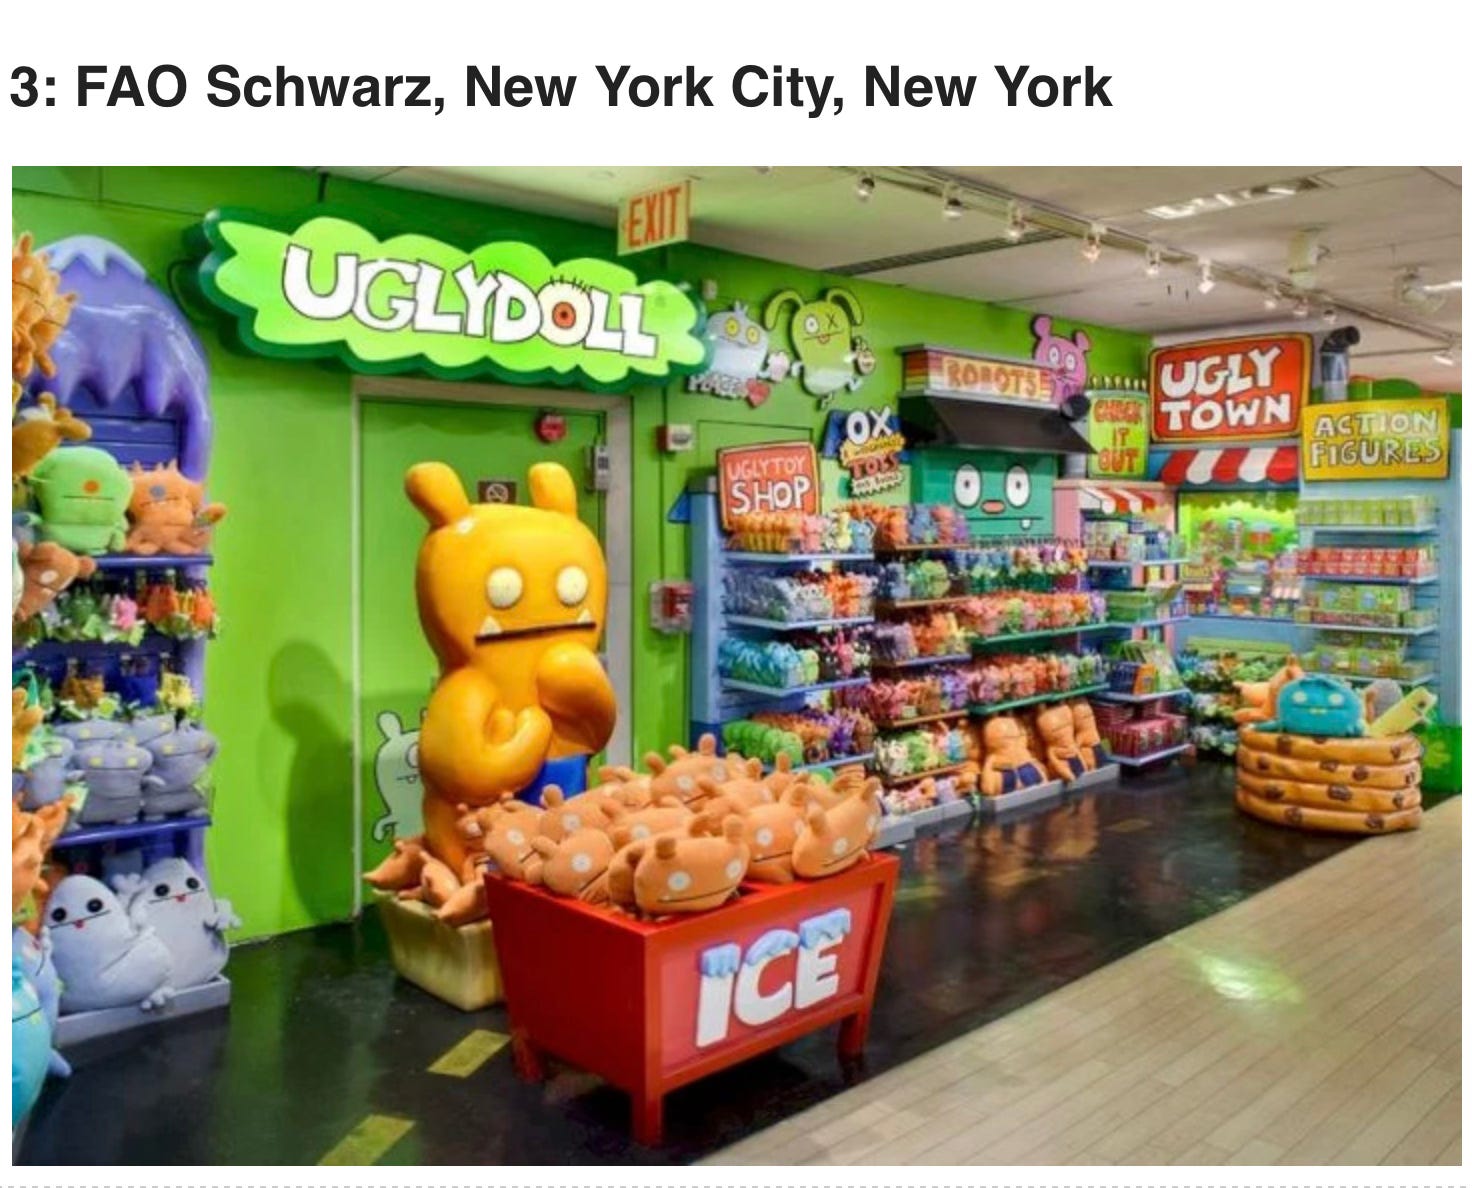 FAO Schwarz to expand internationally and return to NYC